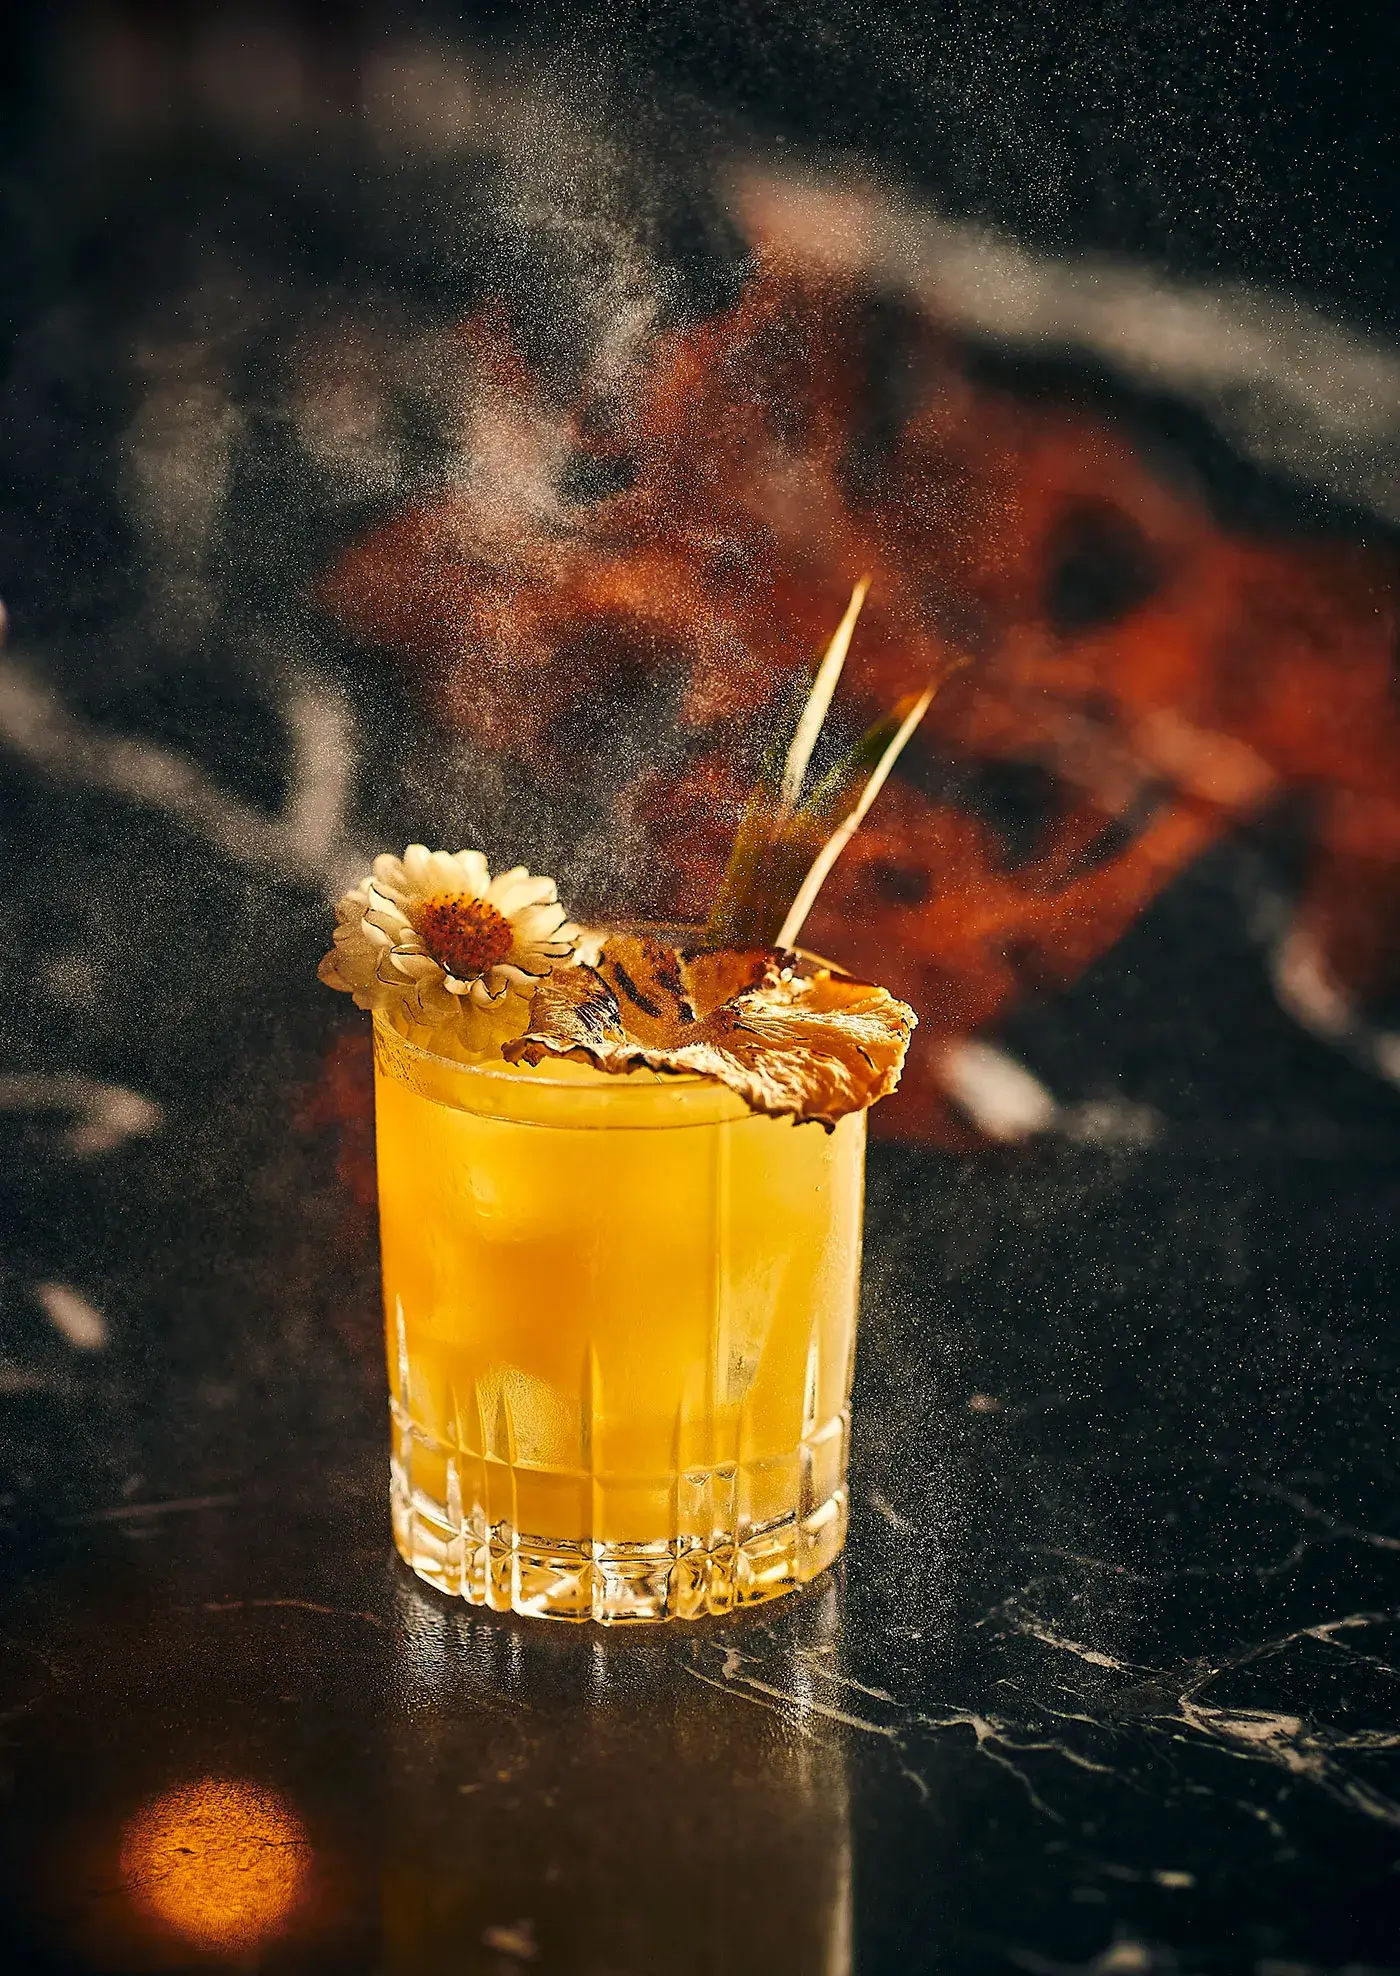 The Folio Cambridge luxury cocktail bar